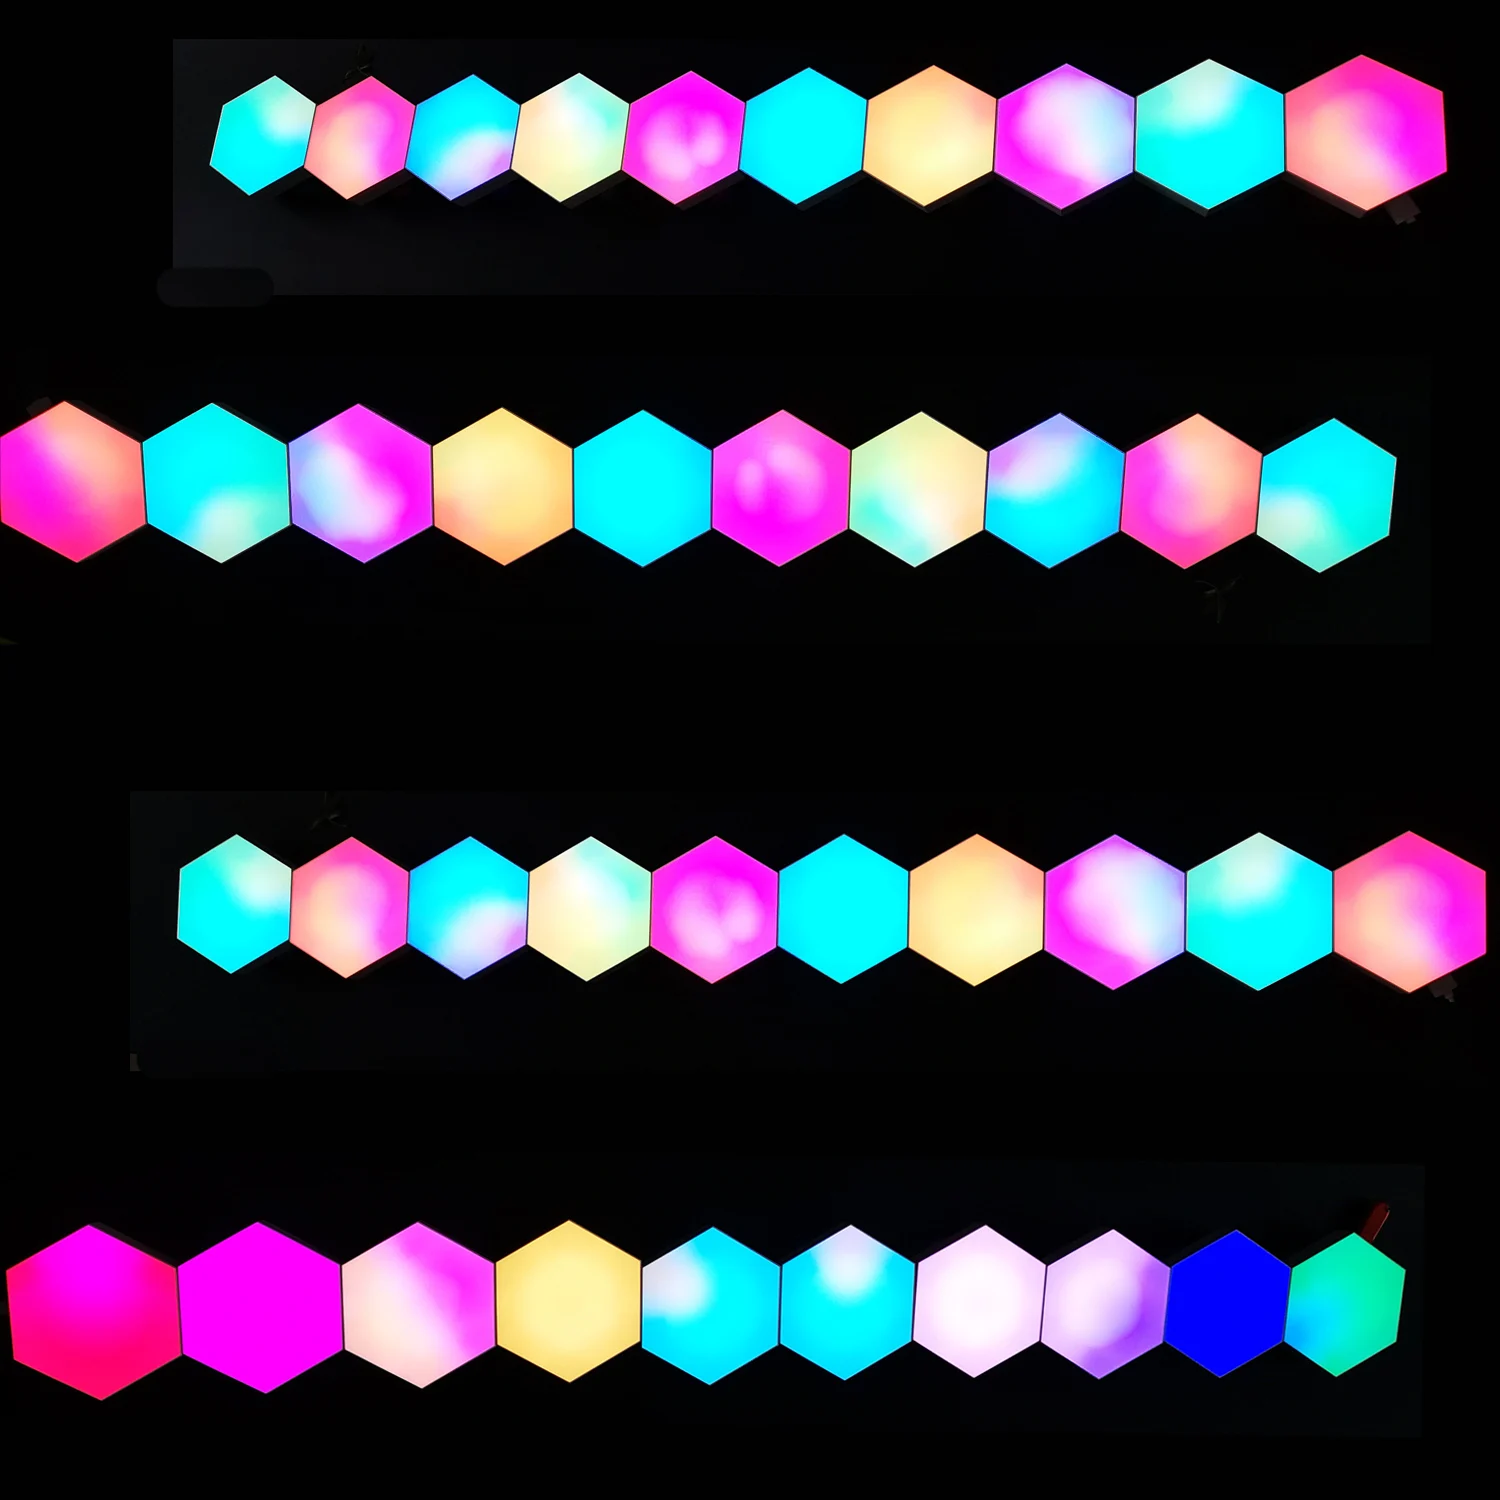 Gaming Room Lighting Decoration Idea 2020 Led Hexagonal Modular Honeycomb Quantum Light Mobile Phone App Controlled Light